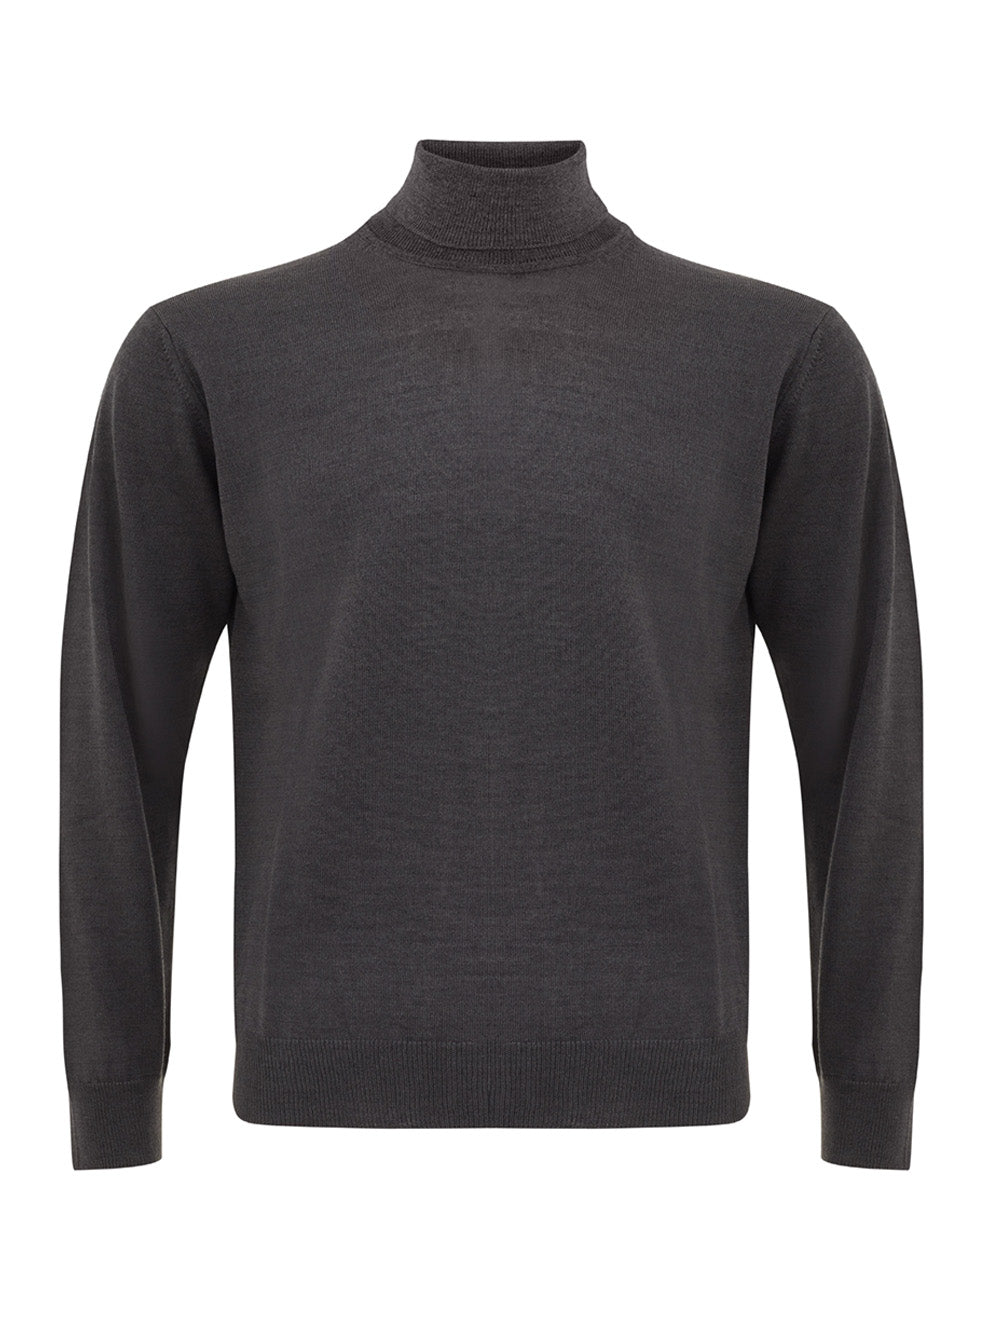 FERRANTE Sleek Anthracite Grey Wool Turtleneck Sweater